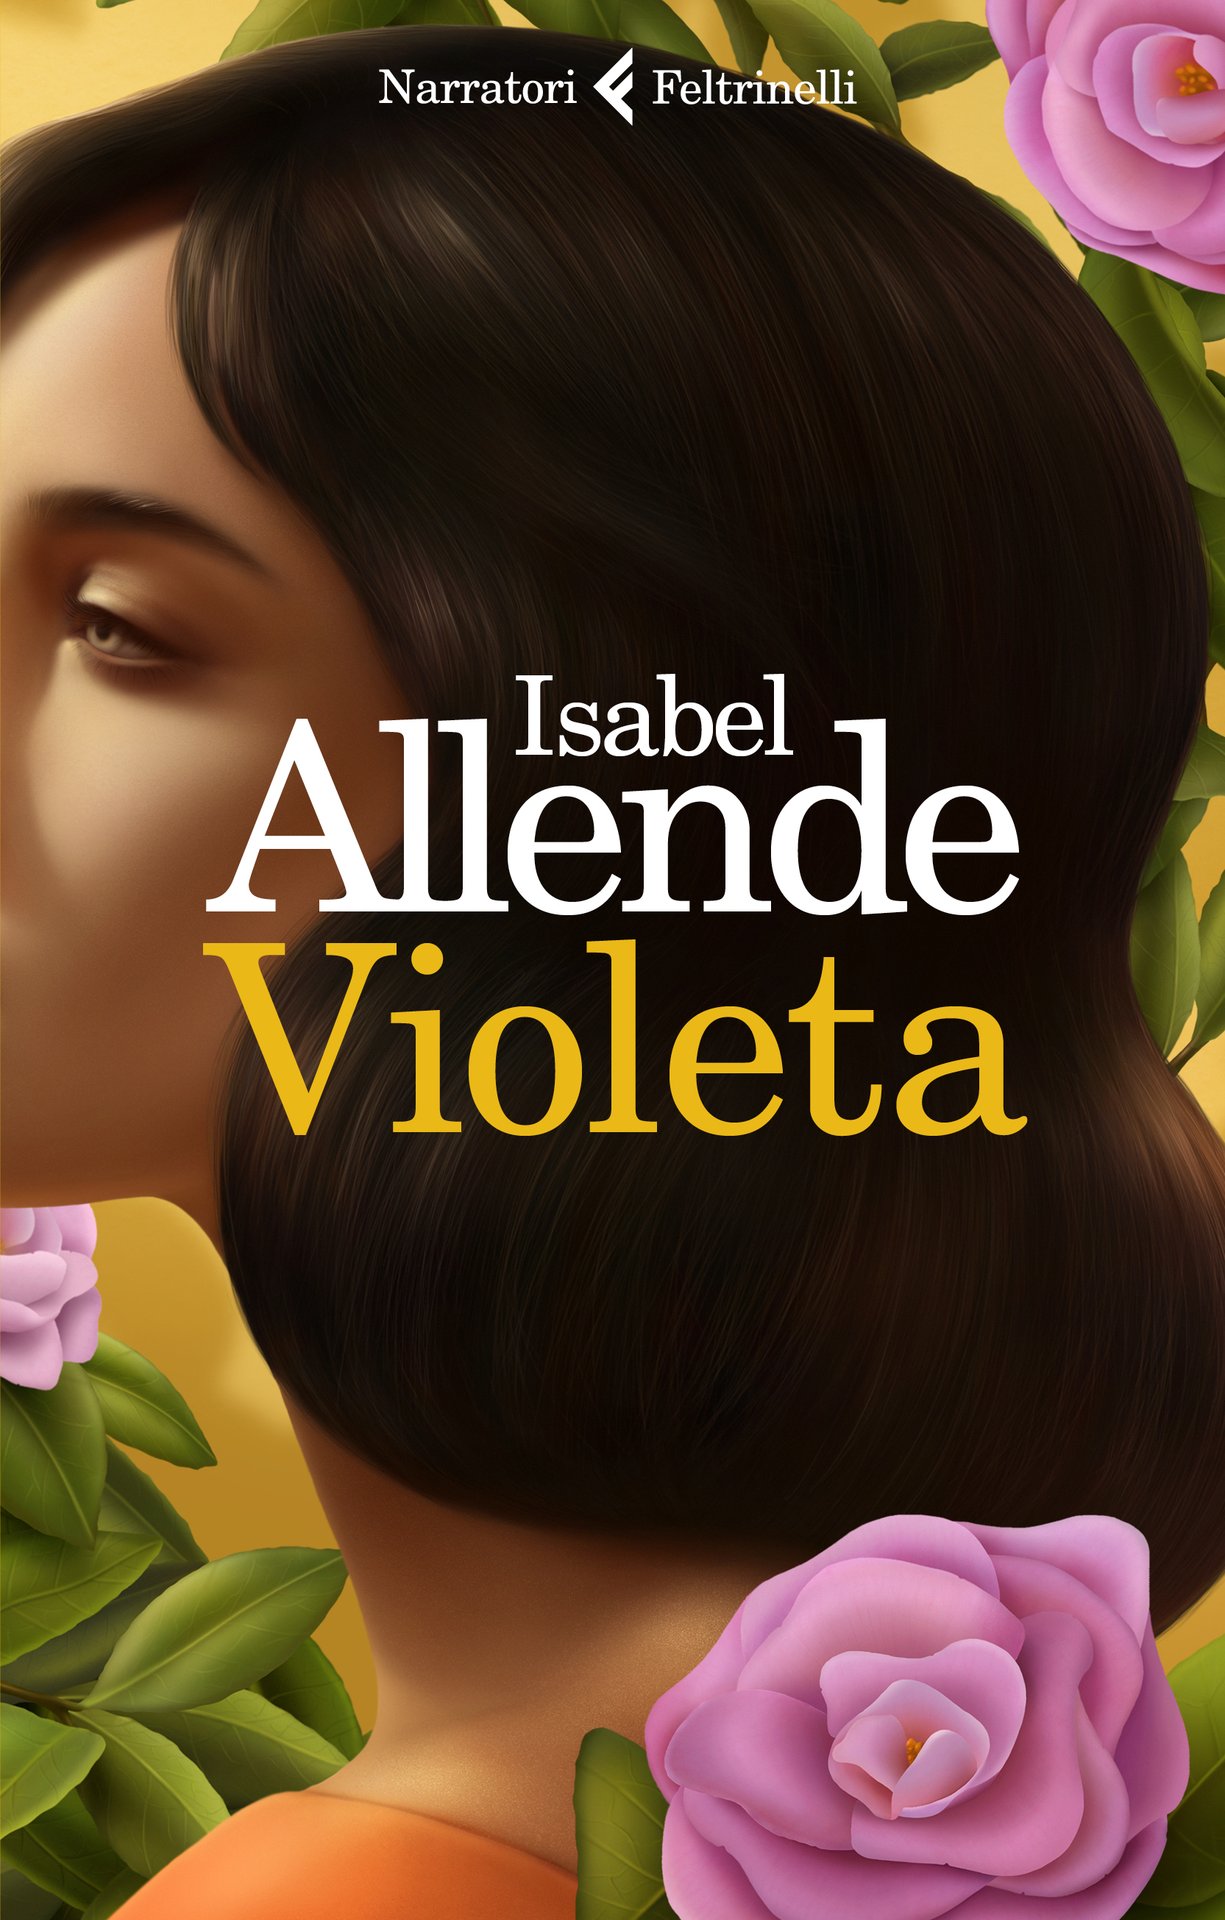 Sfoglia "Violeta" di Isabel Allende